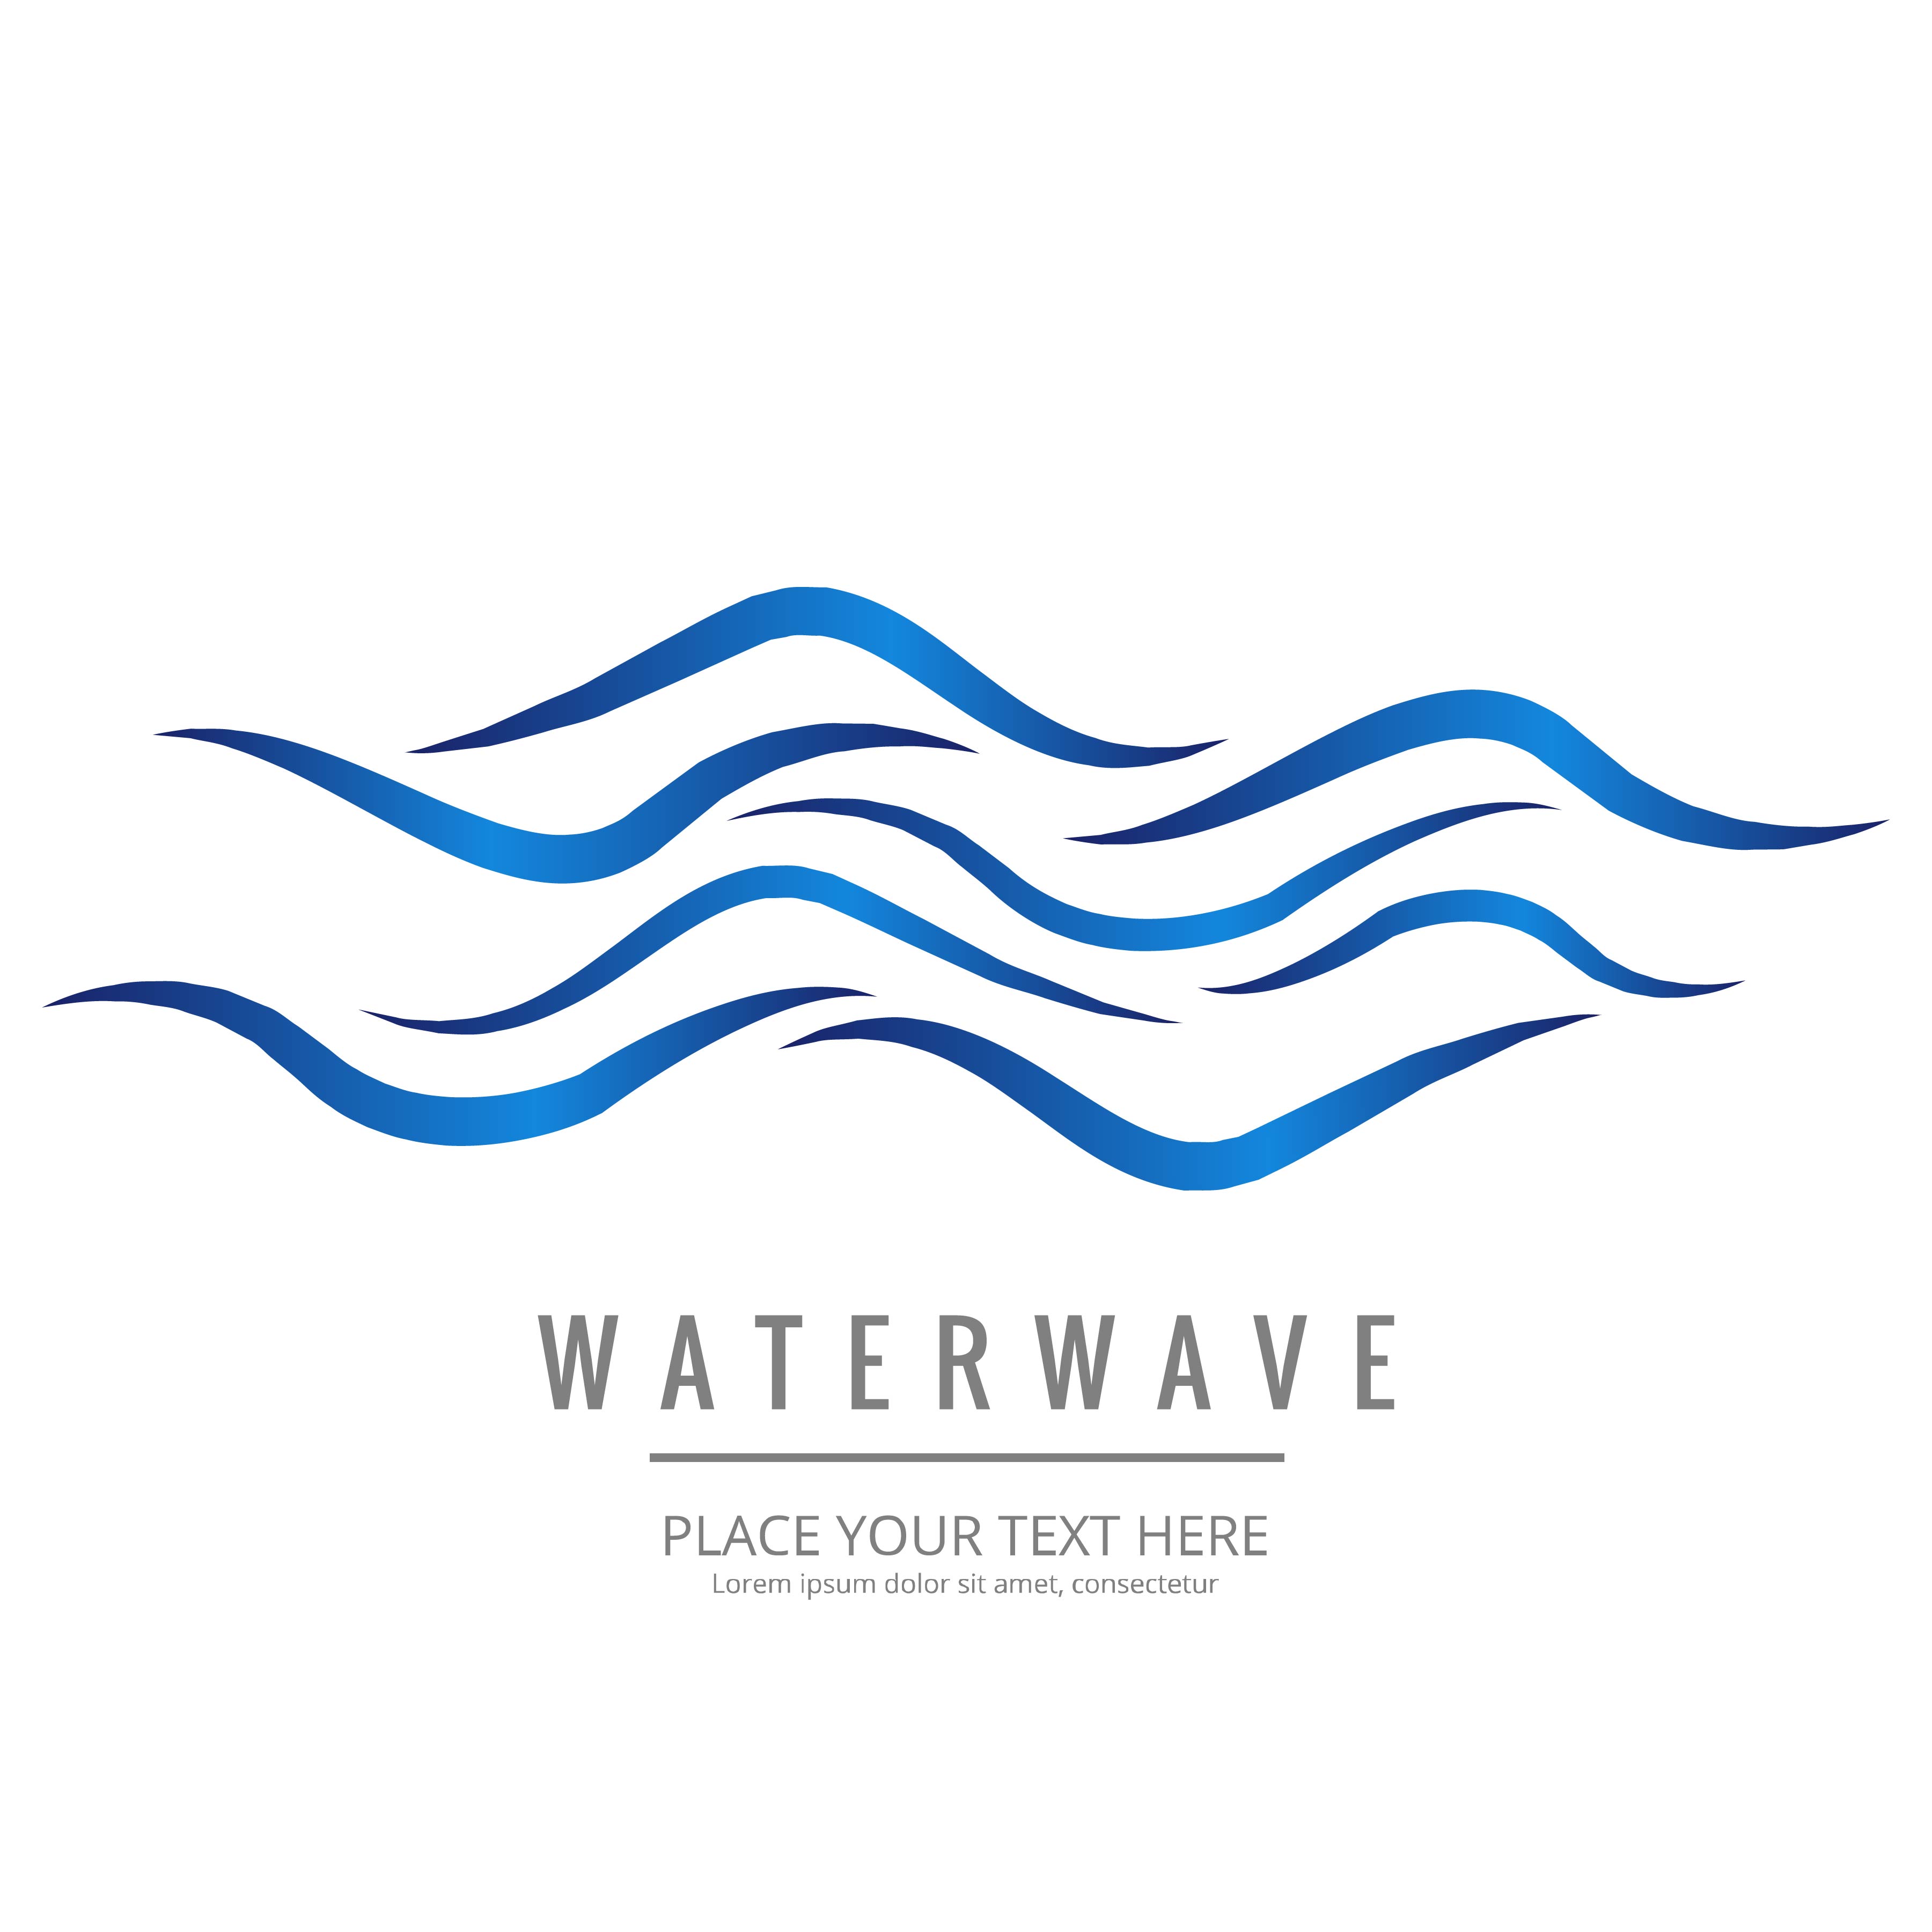 Download Modern water wave background 243718 - Download Free Vectors, Clipart Graphics & Vector Art